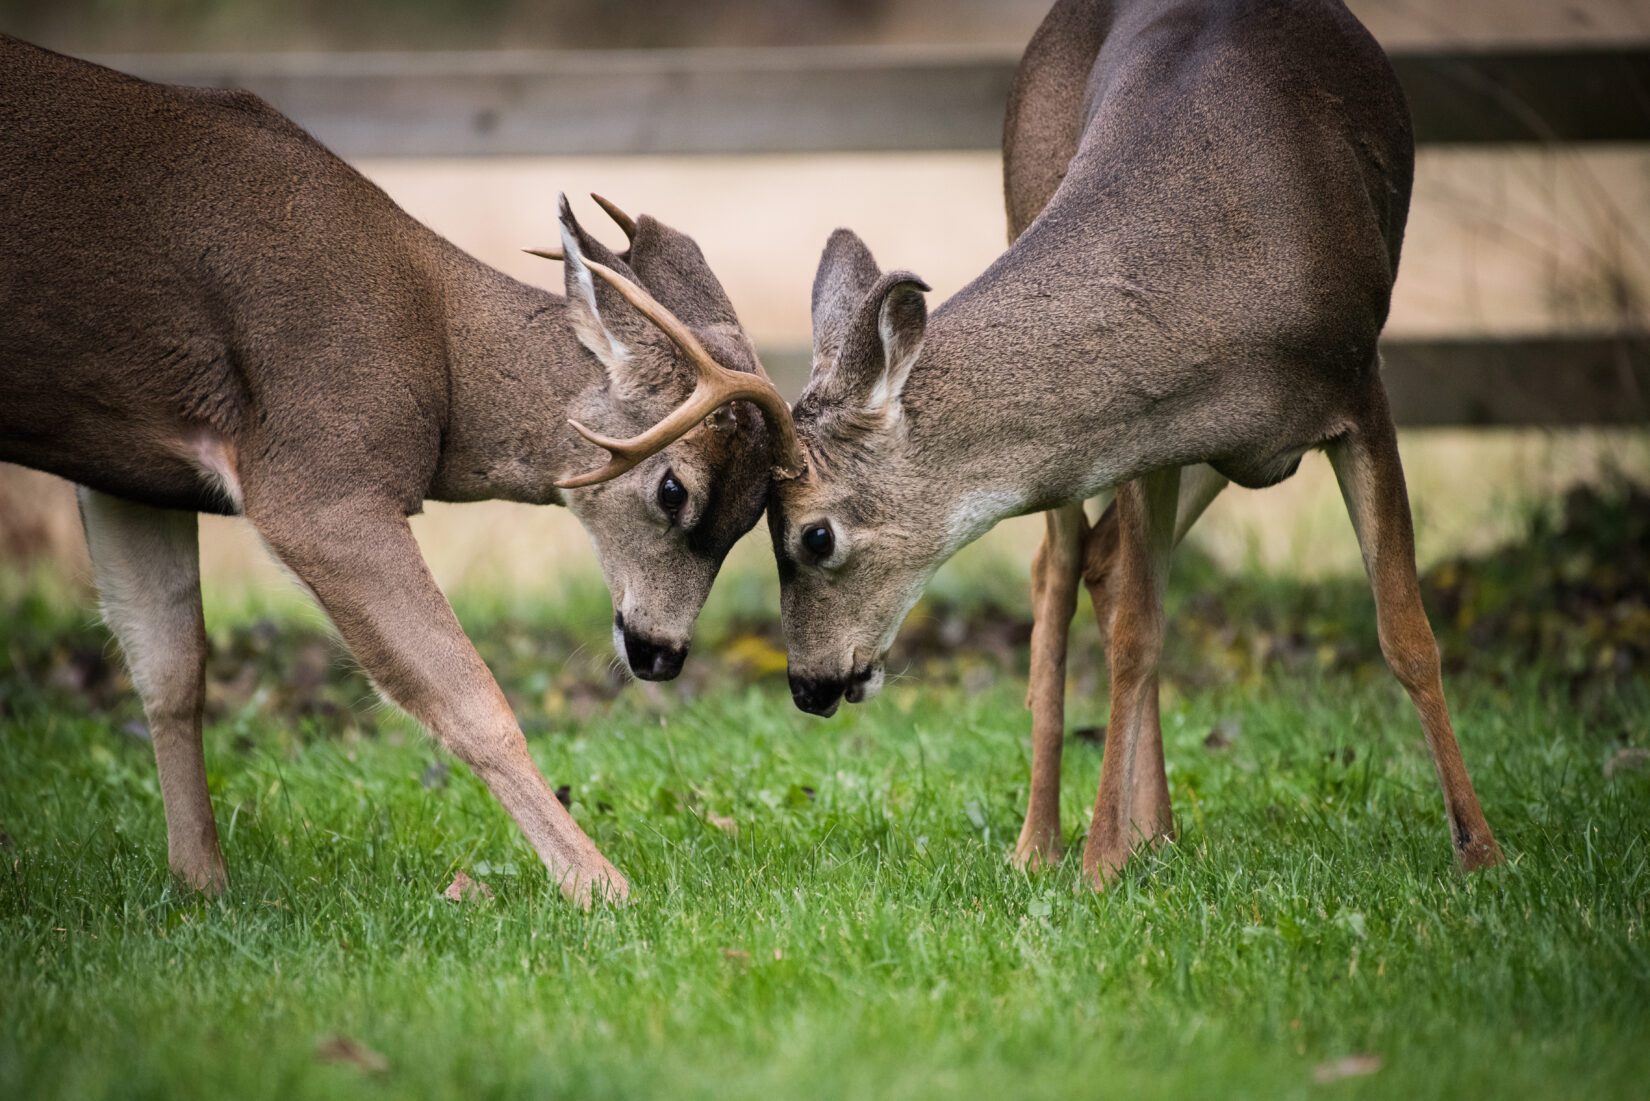 Two deer touching heads